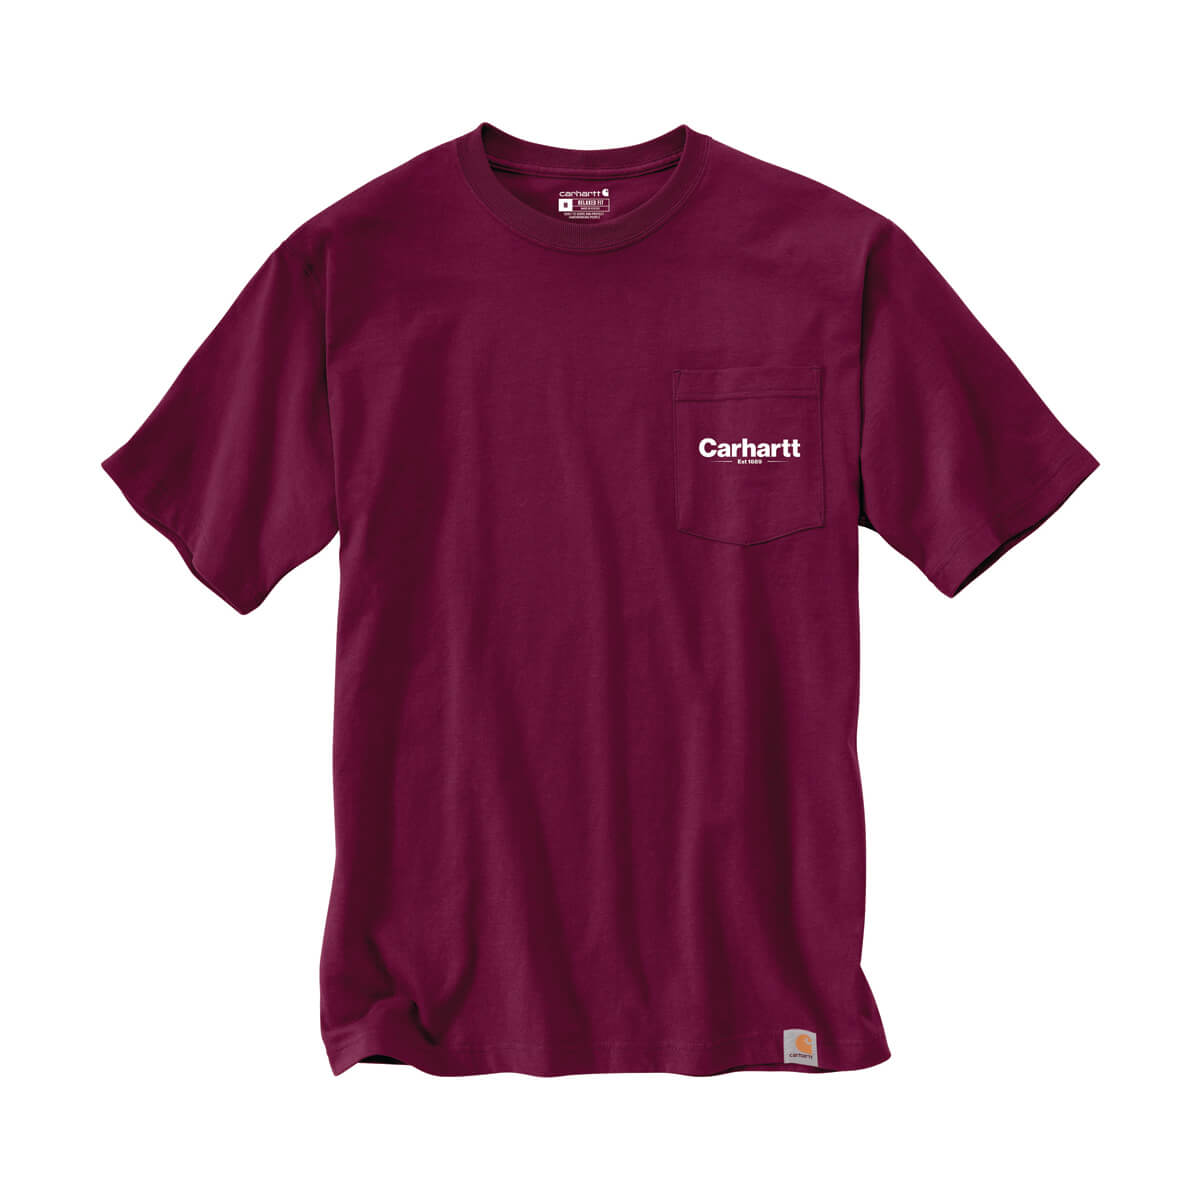 Carhartt Relaxed Fit Heavyweight Short-Sleeve Pocket Line Graphic T-Shirt - Port